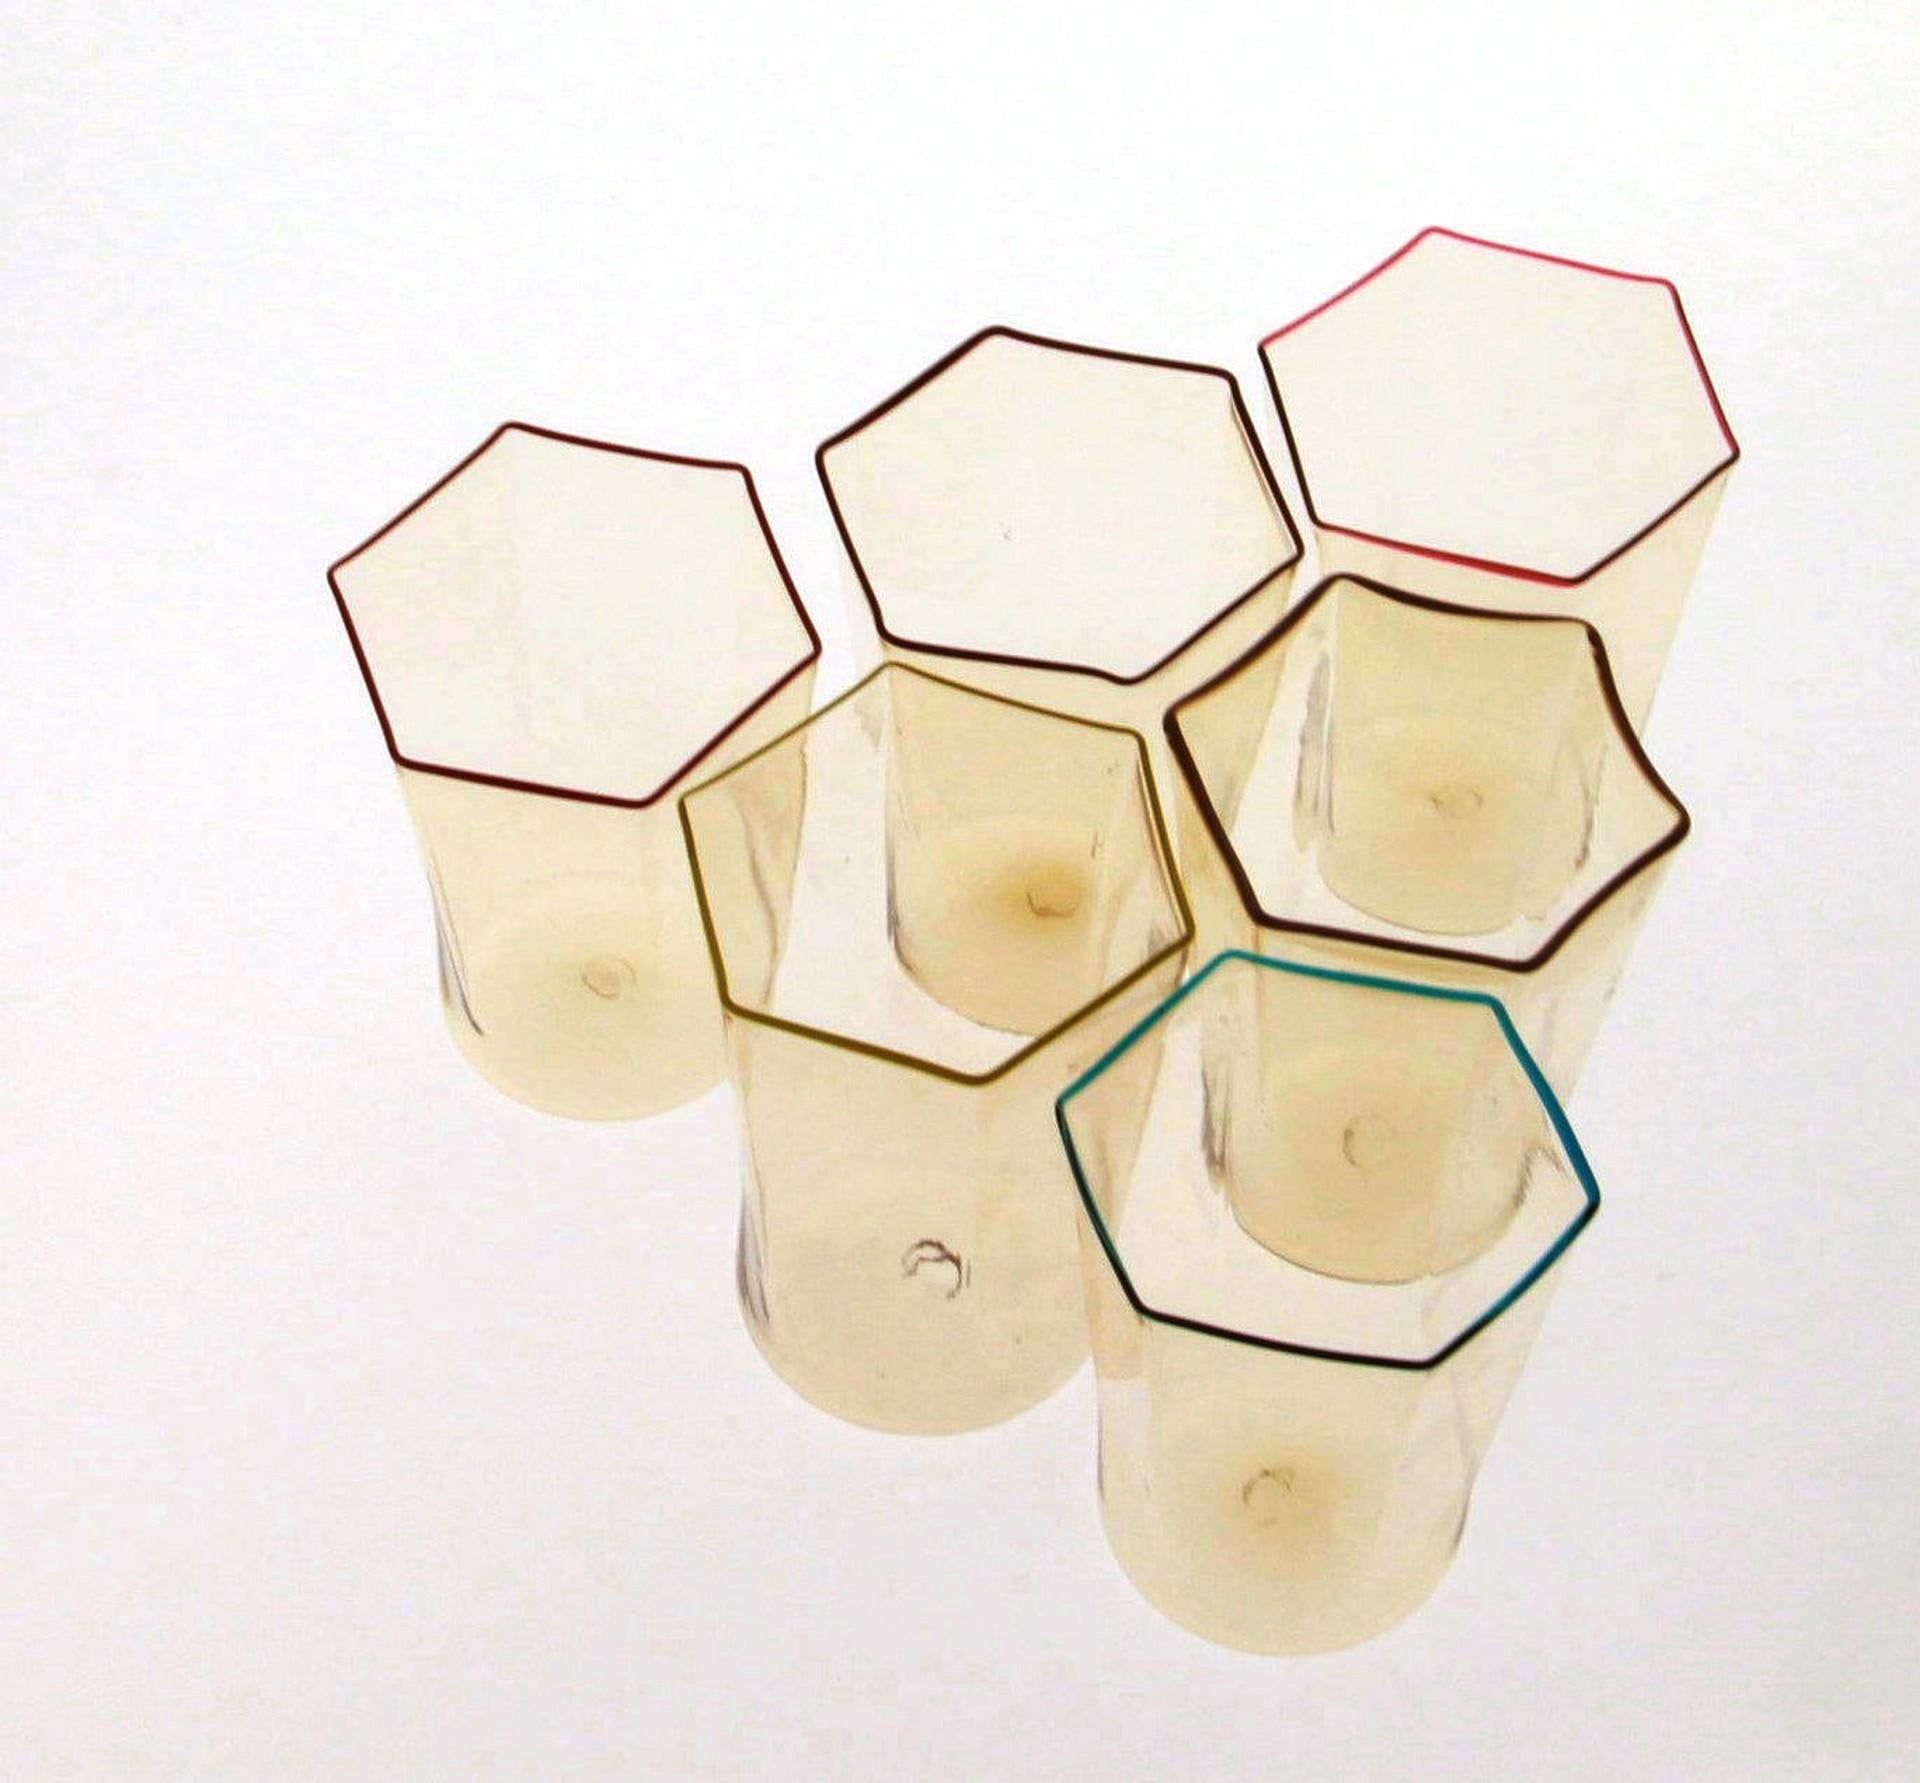 Mid-Century Modern Six Hexagonal Pagliesco Glasses, Assorted Color Rim, Carlo Scarpa, 1932 Design